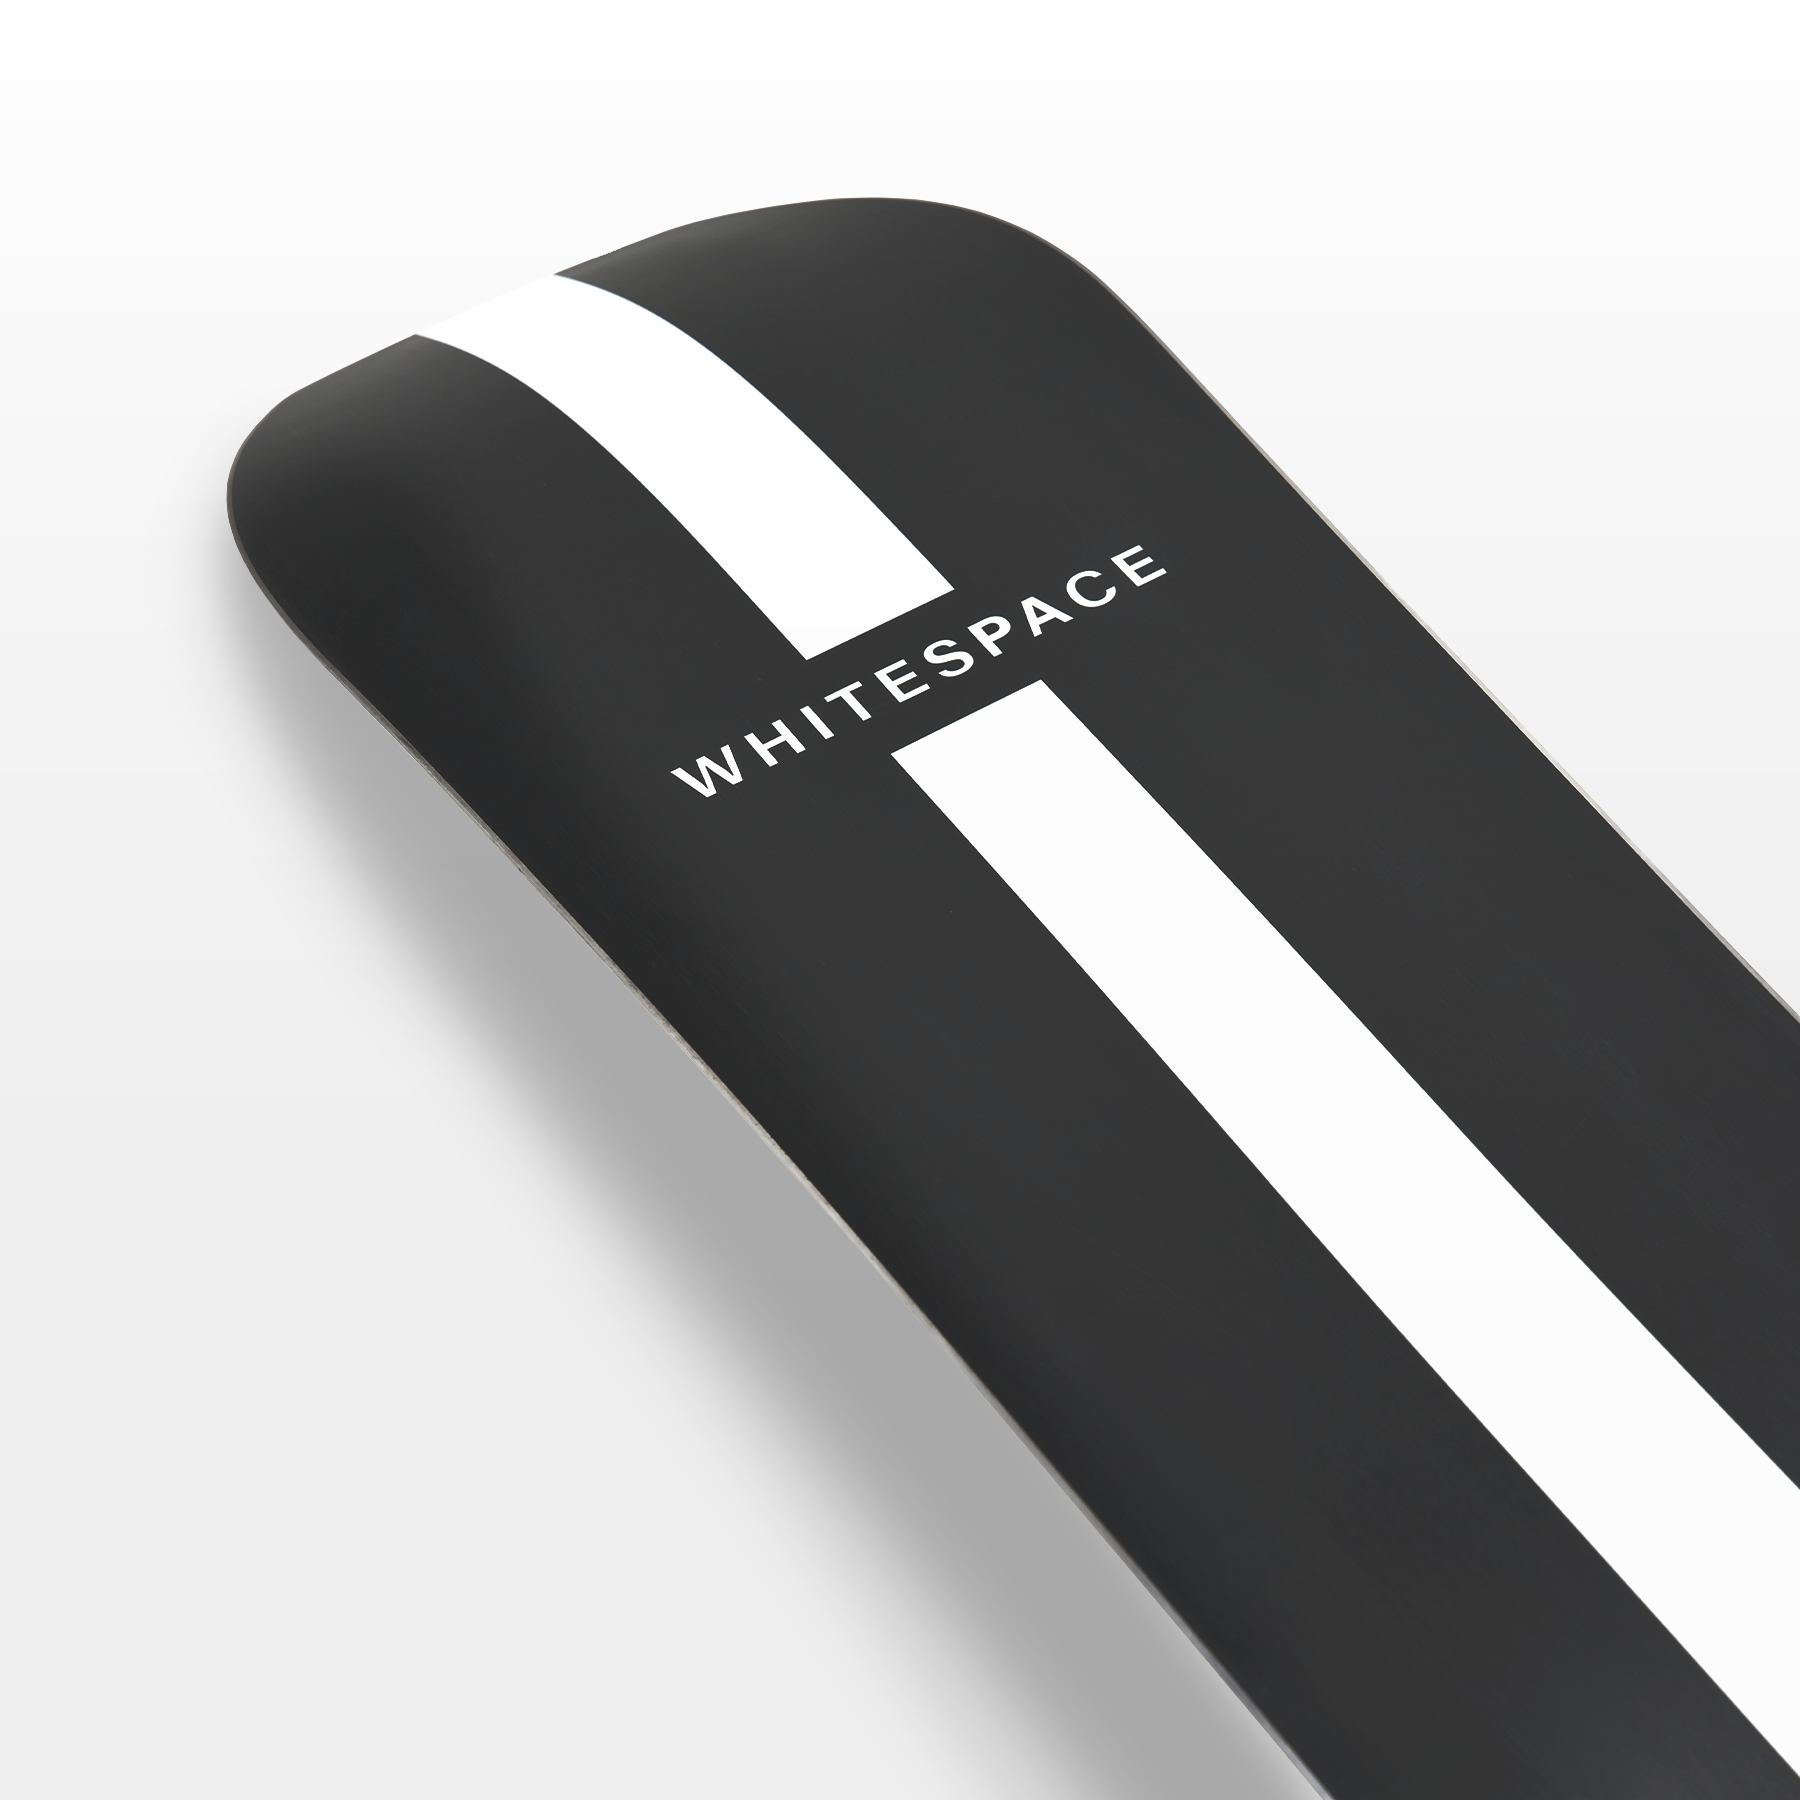 Shaun White's launches snowboard brand Whitespace